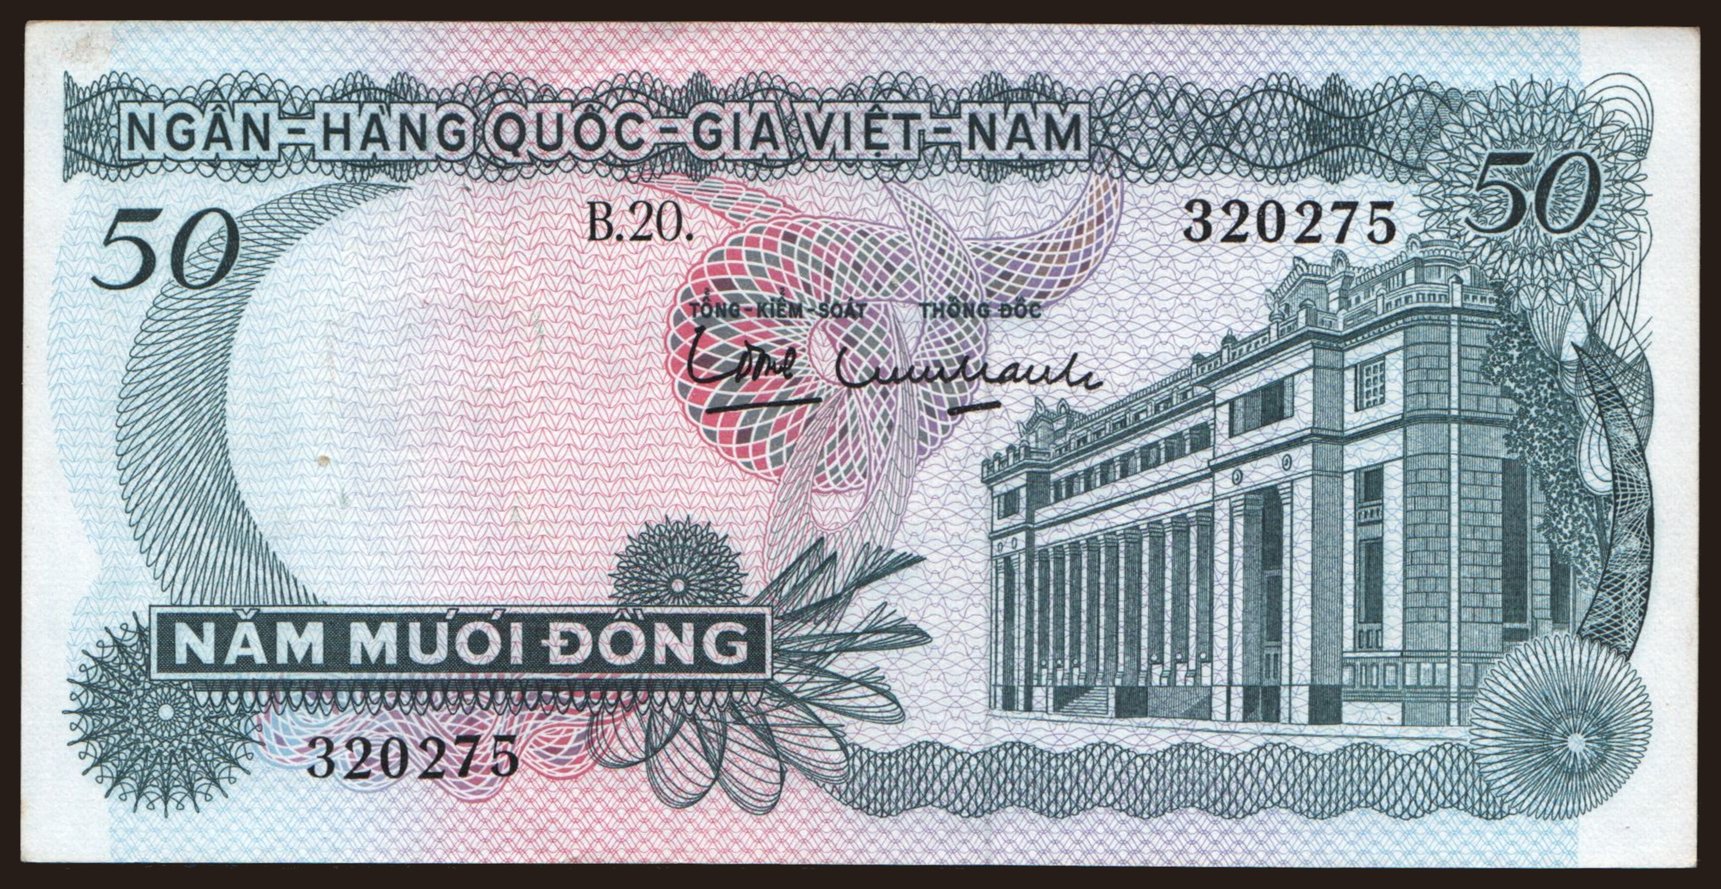 50 dong, 1969